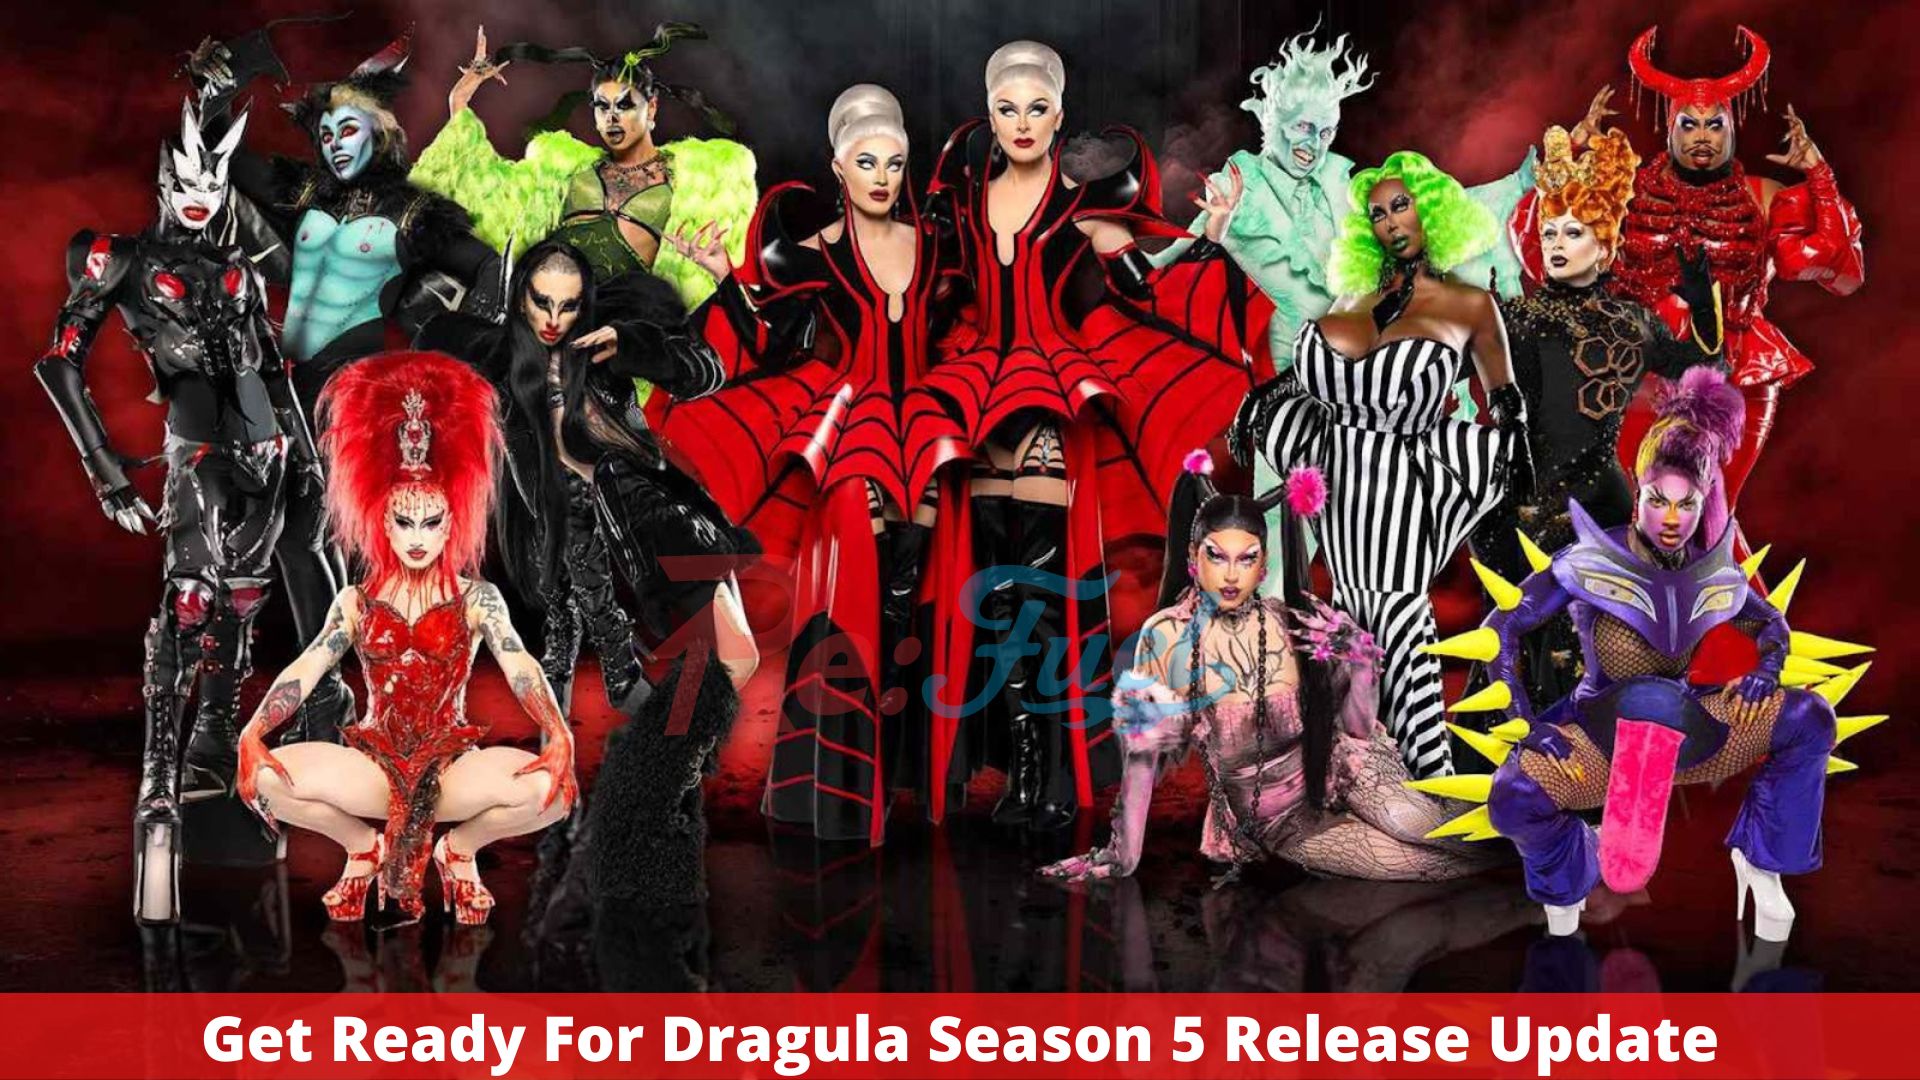 Get Ready For Dragula Season 5 Release Update